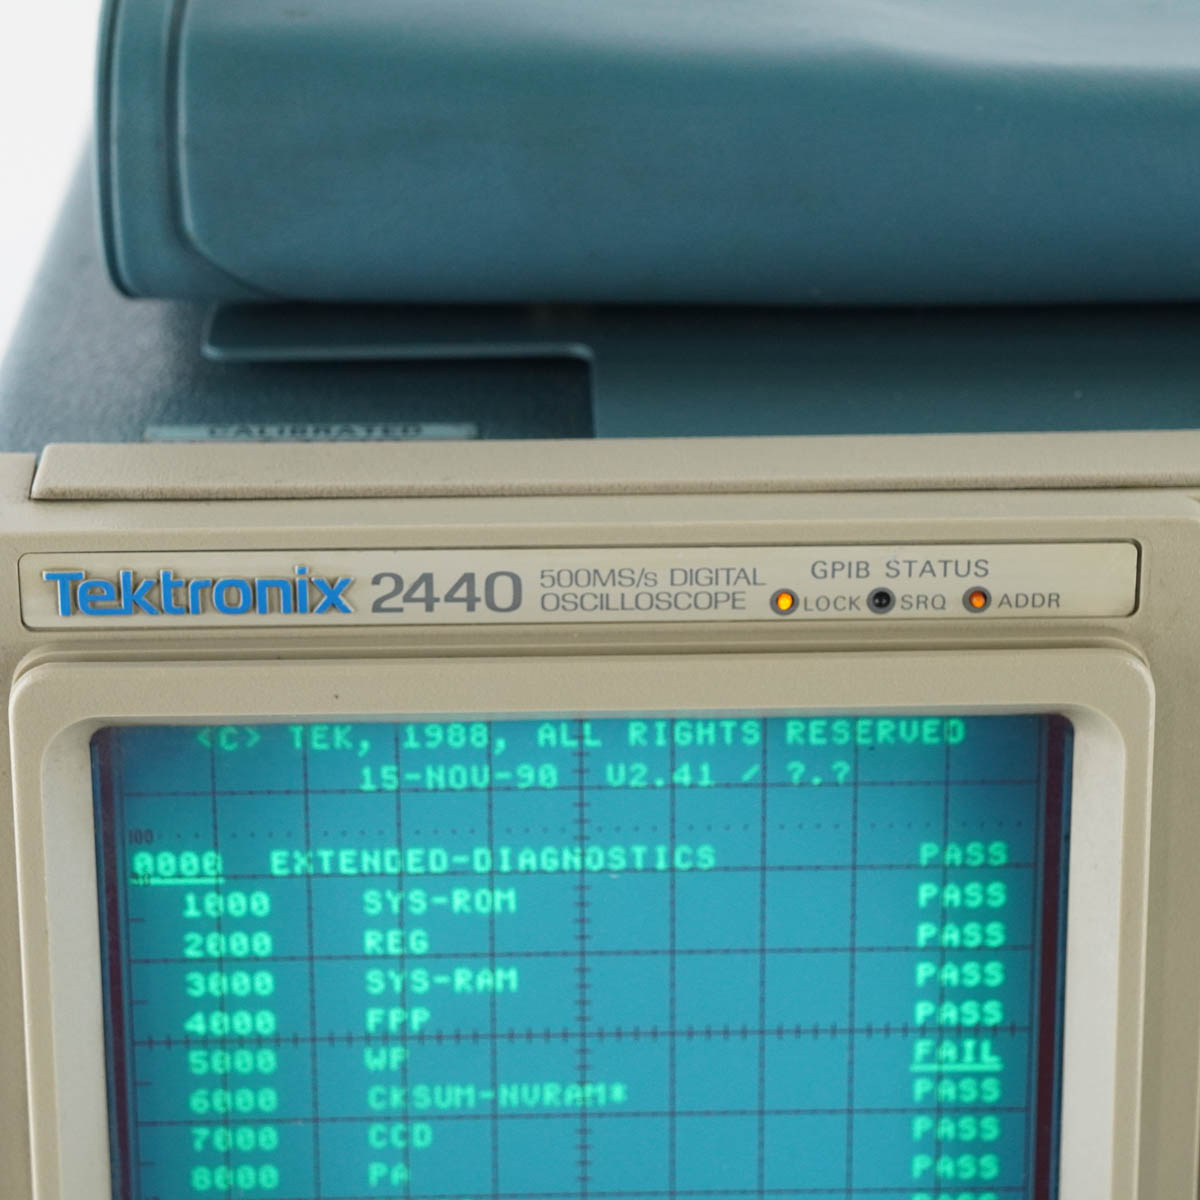 JB]USED 現状販売 Tektronix 2440 DIGITAL OSCILLOSCOPE デジタル